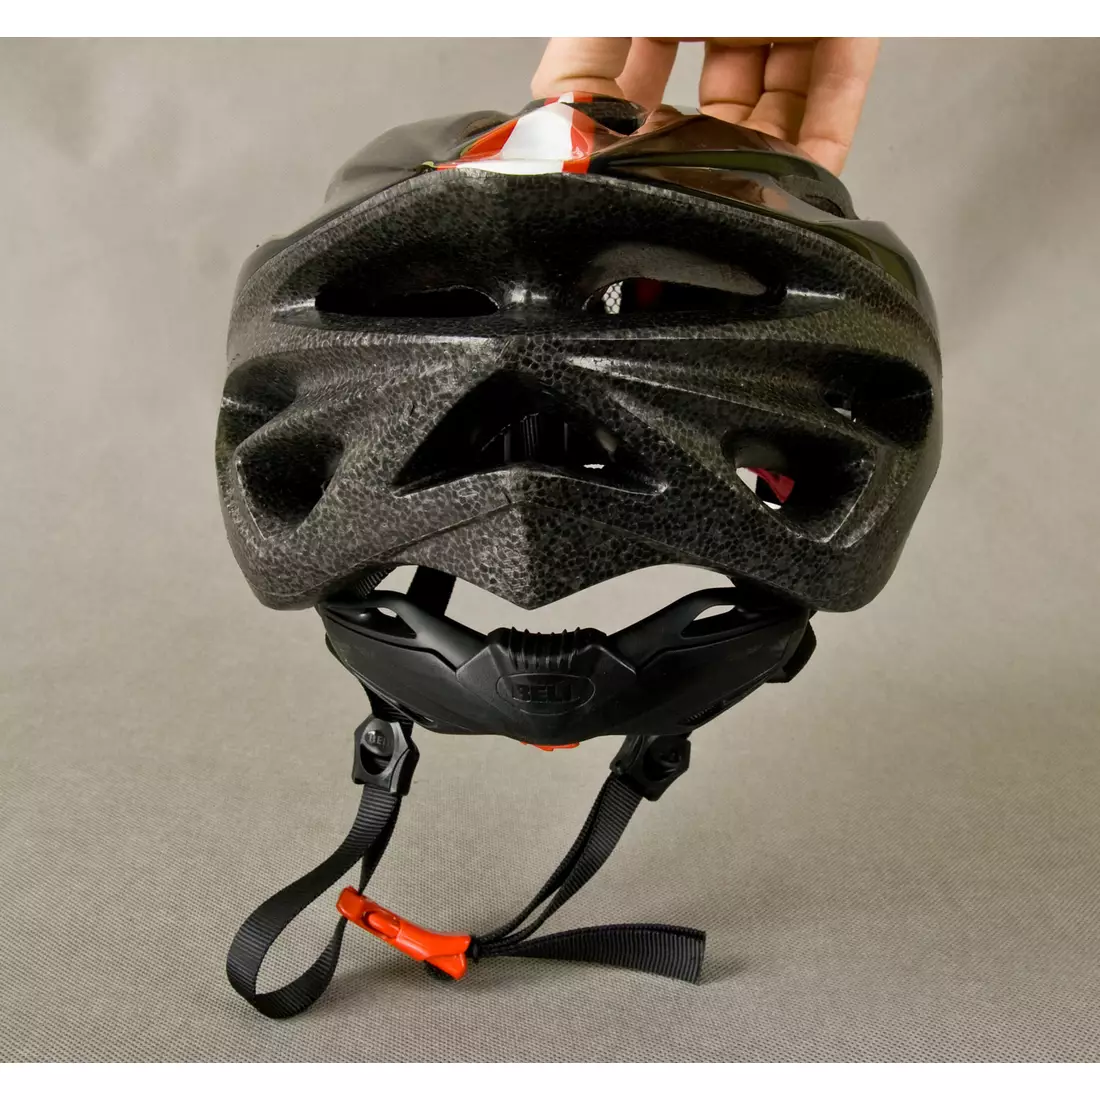 Cyklistická helma BELL SOLAR černo červená